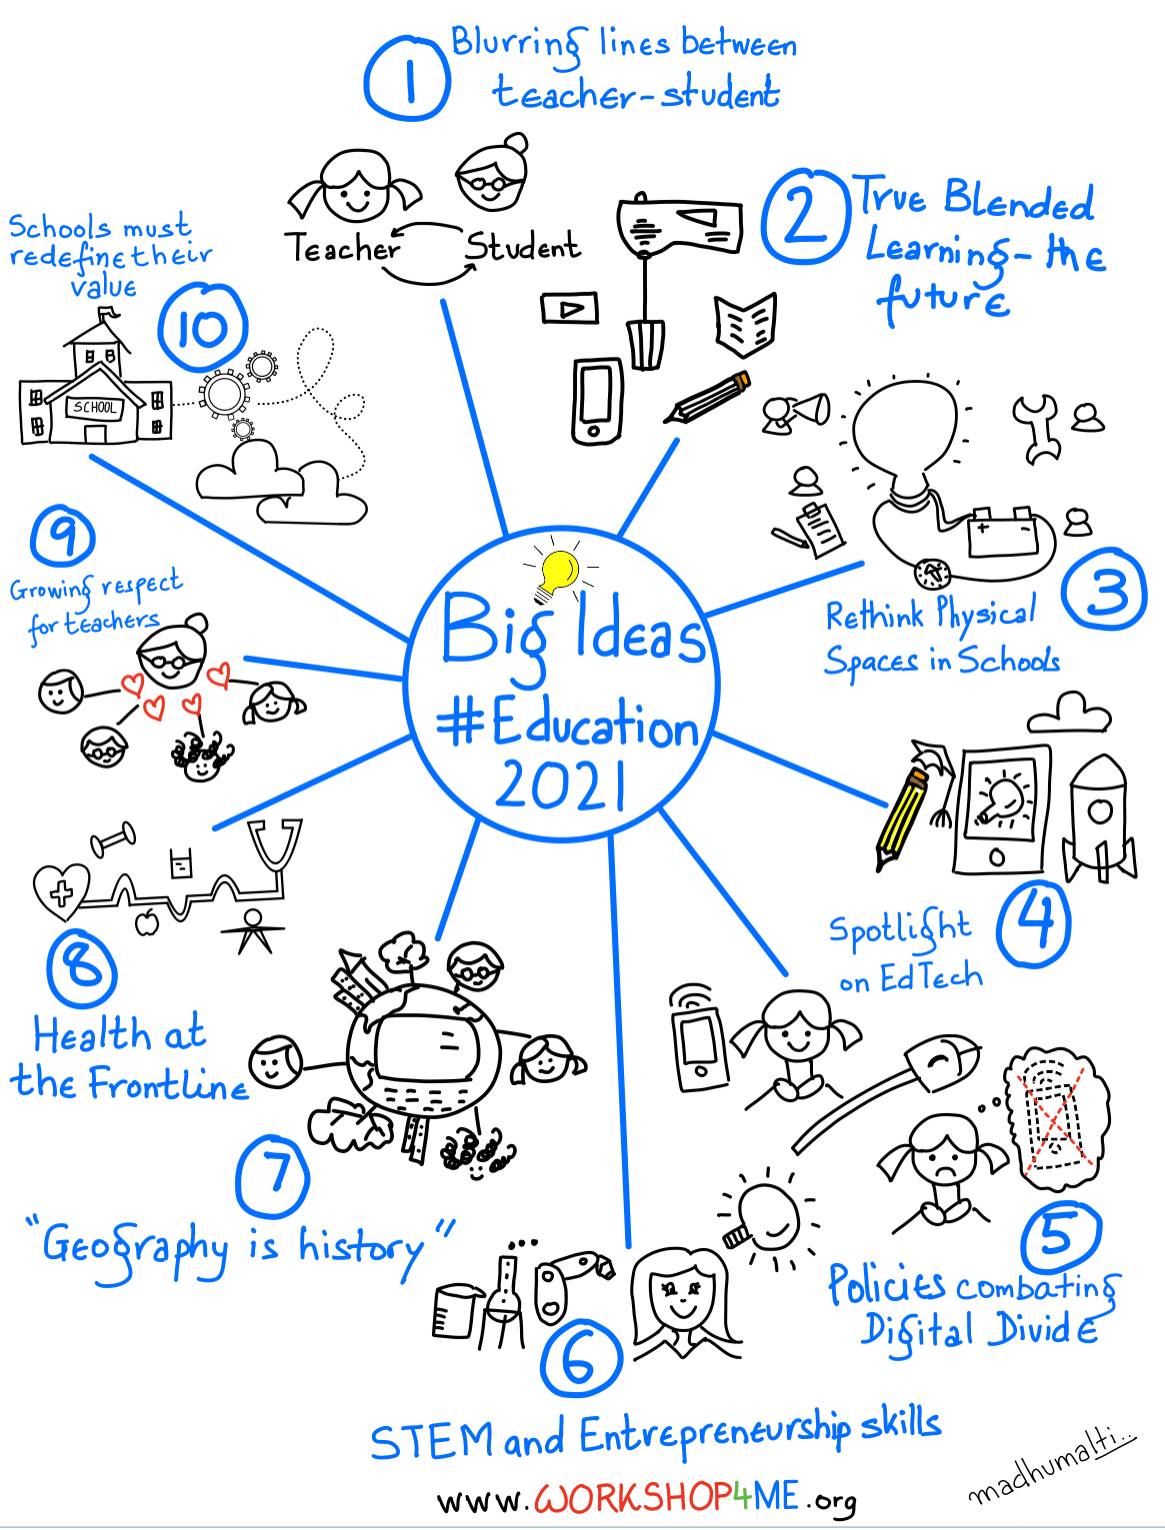 10 Big Ideas 2021 #Education